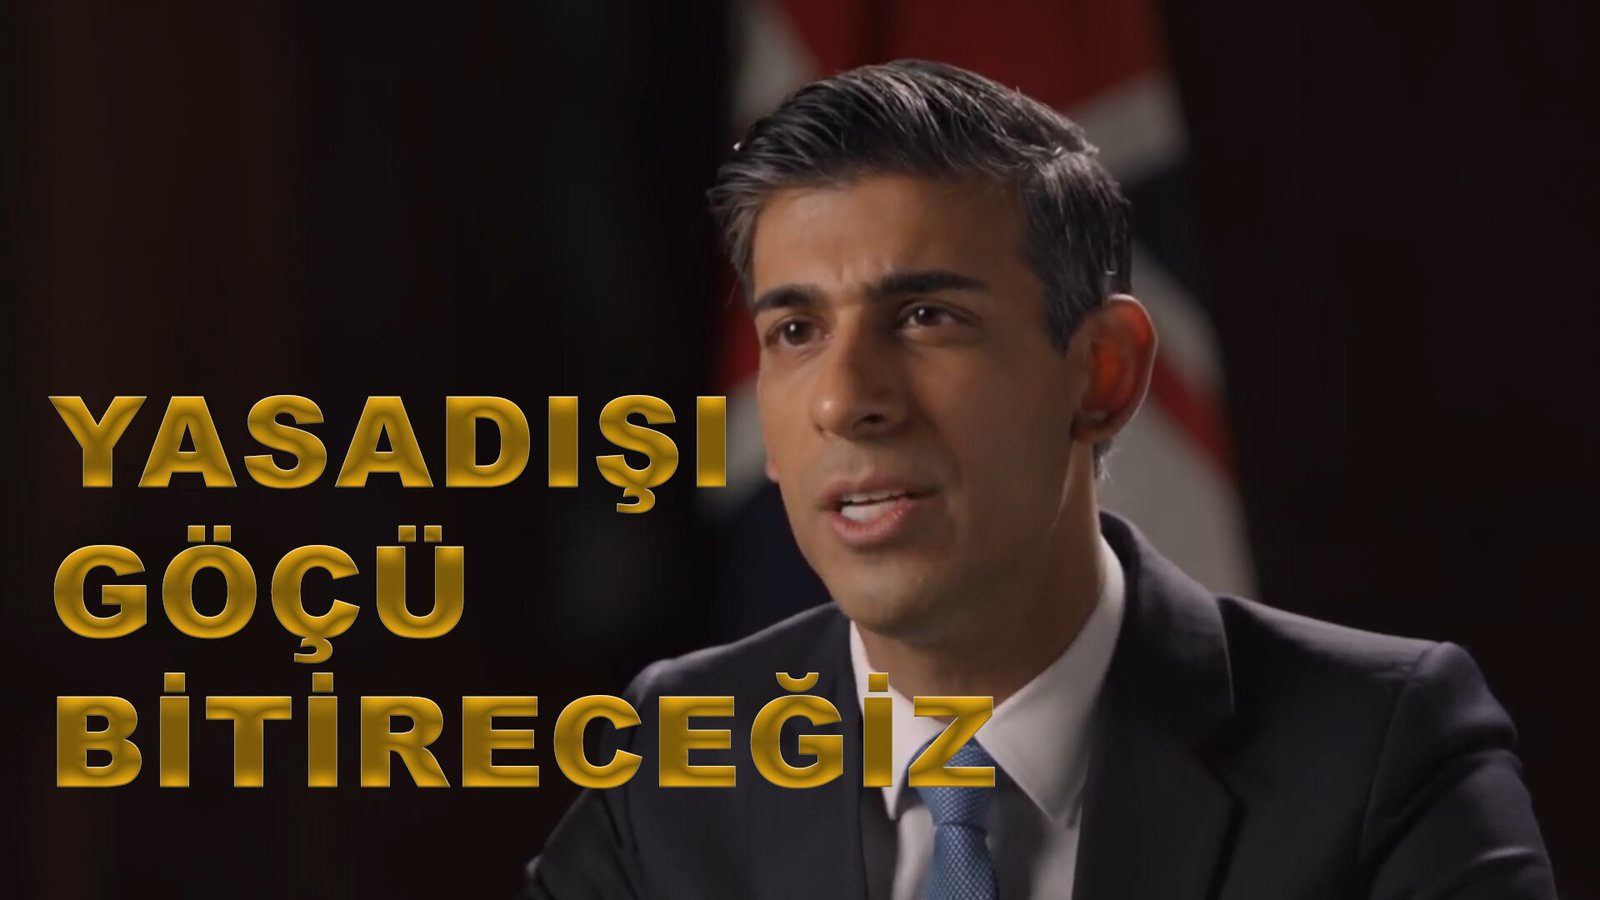 English Turkish Subtitles for Sunak's Speech on Migration